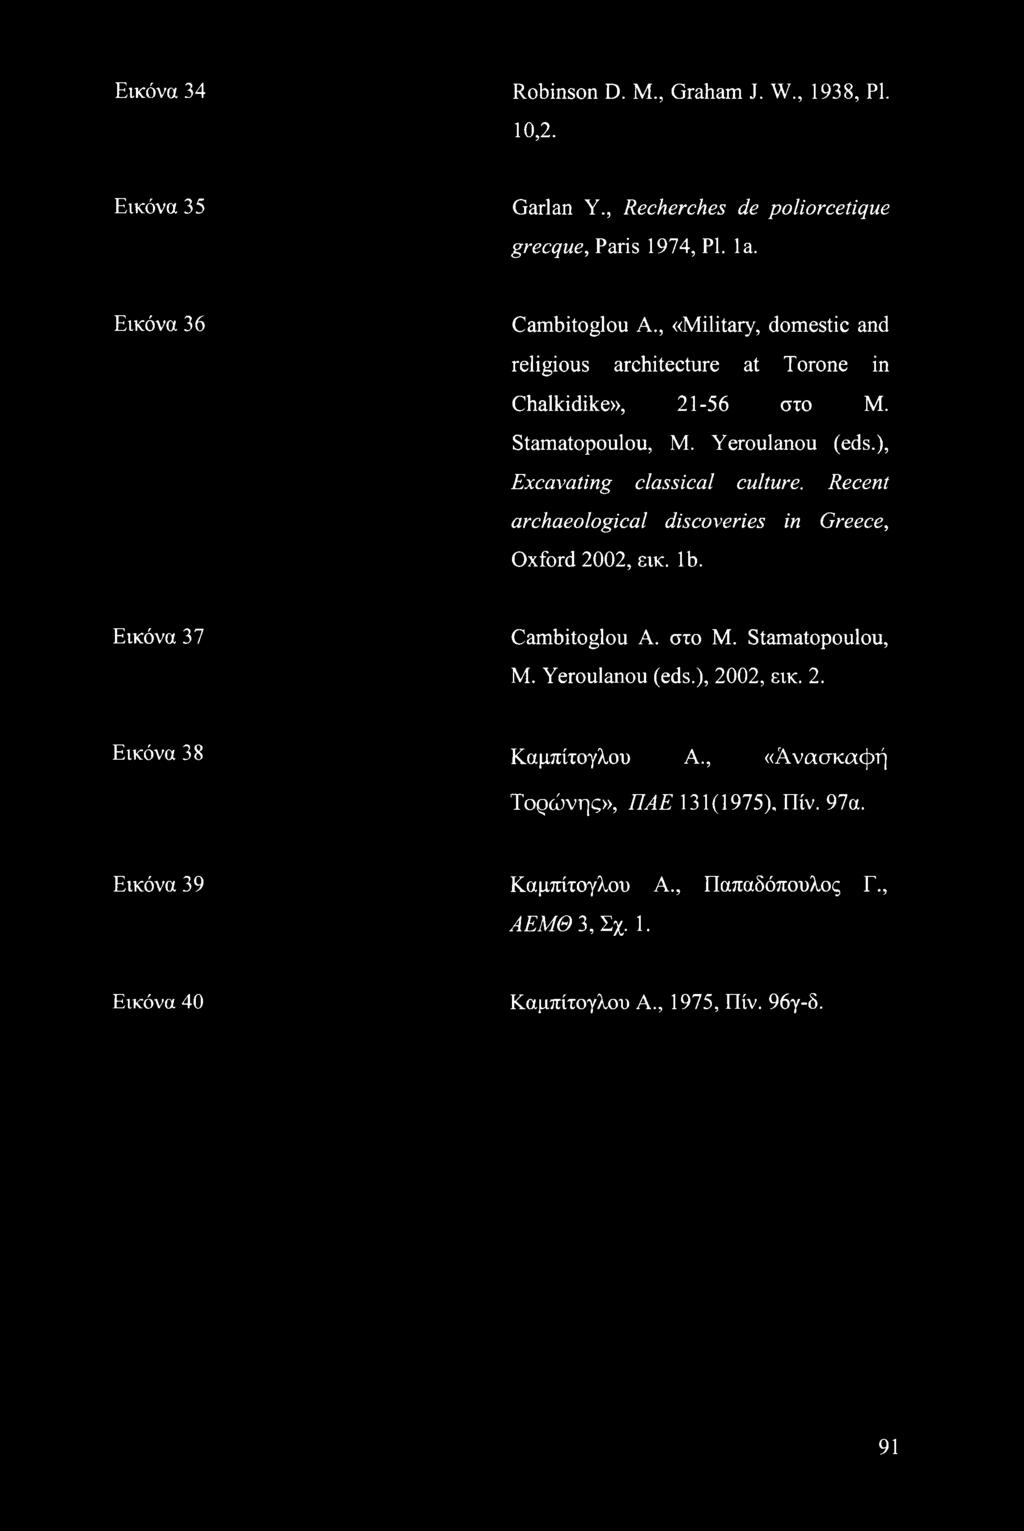 Recent archaeological discoveries in Greece, Oxford 2002, εικ. lb. Εικόνα 37 Cambitoglou A. στο M. Stamatopoulou, M. Yeroulanou (eds.), 2002, εικ. 2. Εικόνα 38 Καμπίτογλου A.